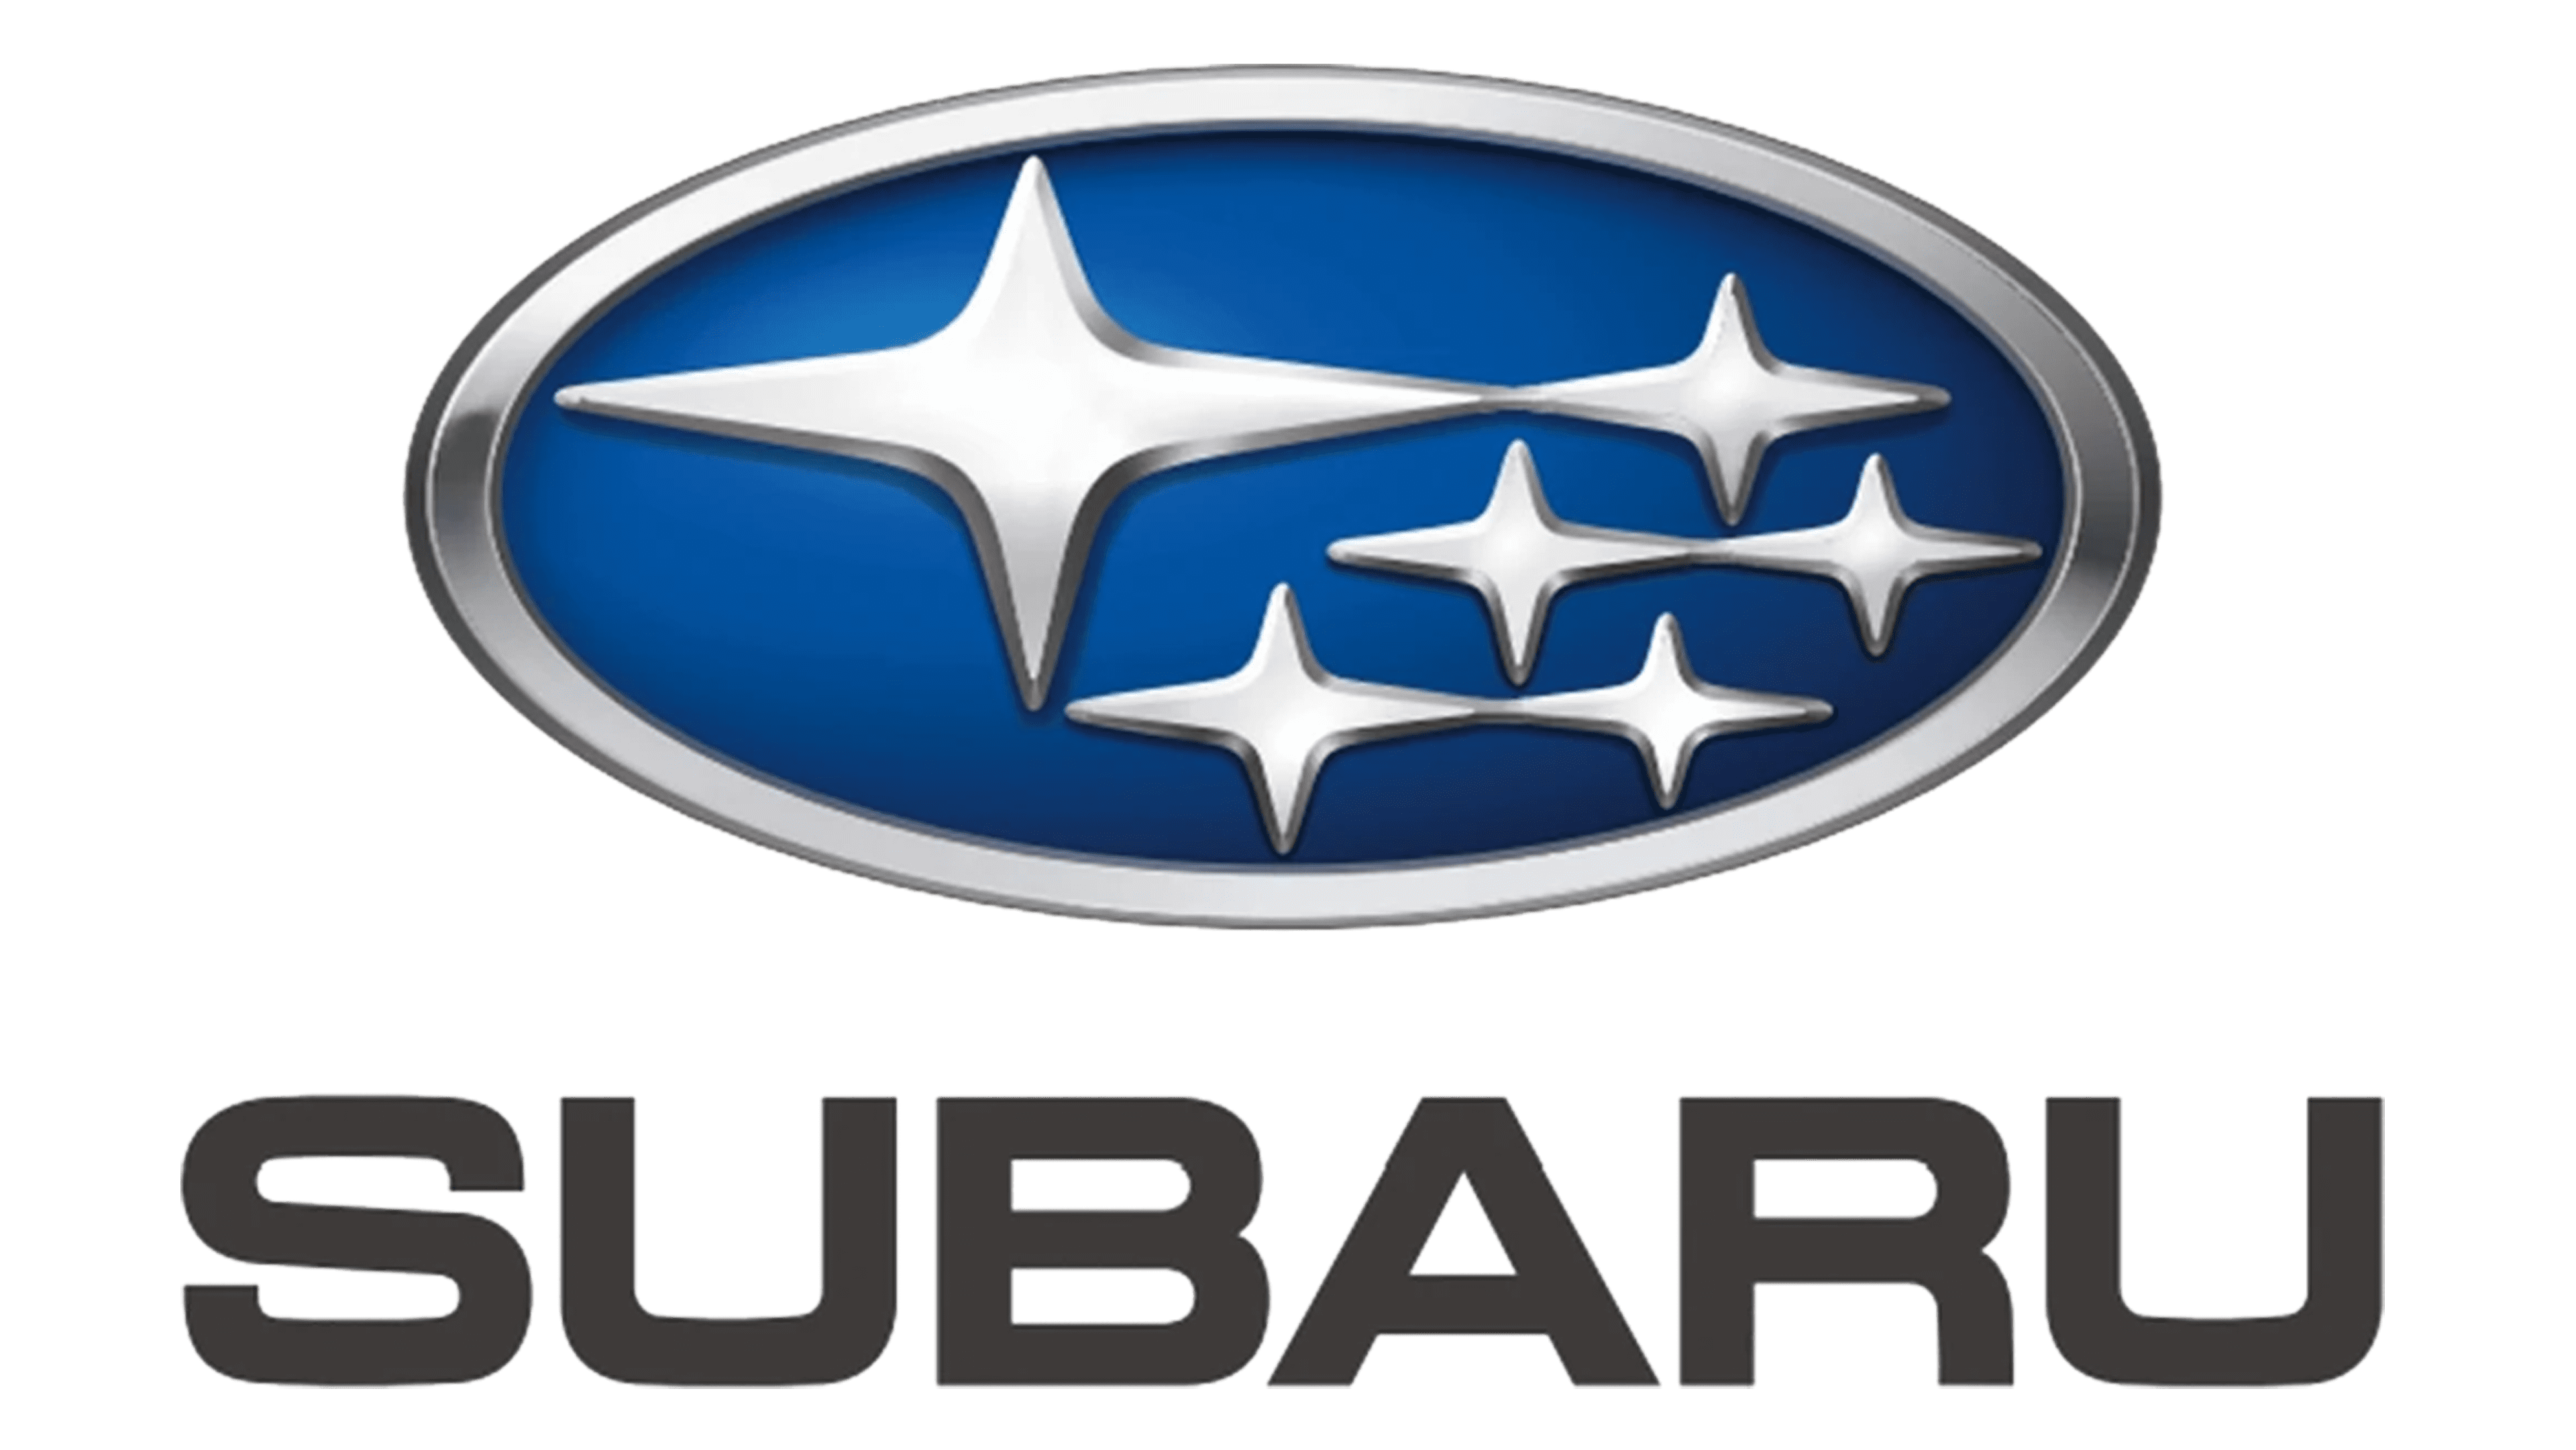 Subaru Logo, Subaru Car Symbol Meaning and History | Car brands